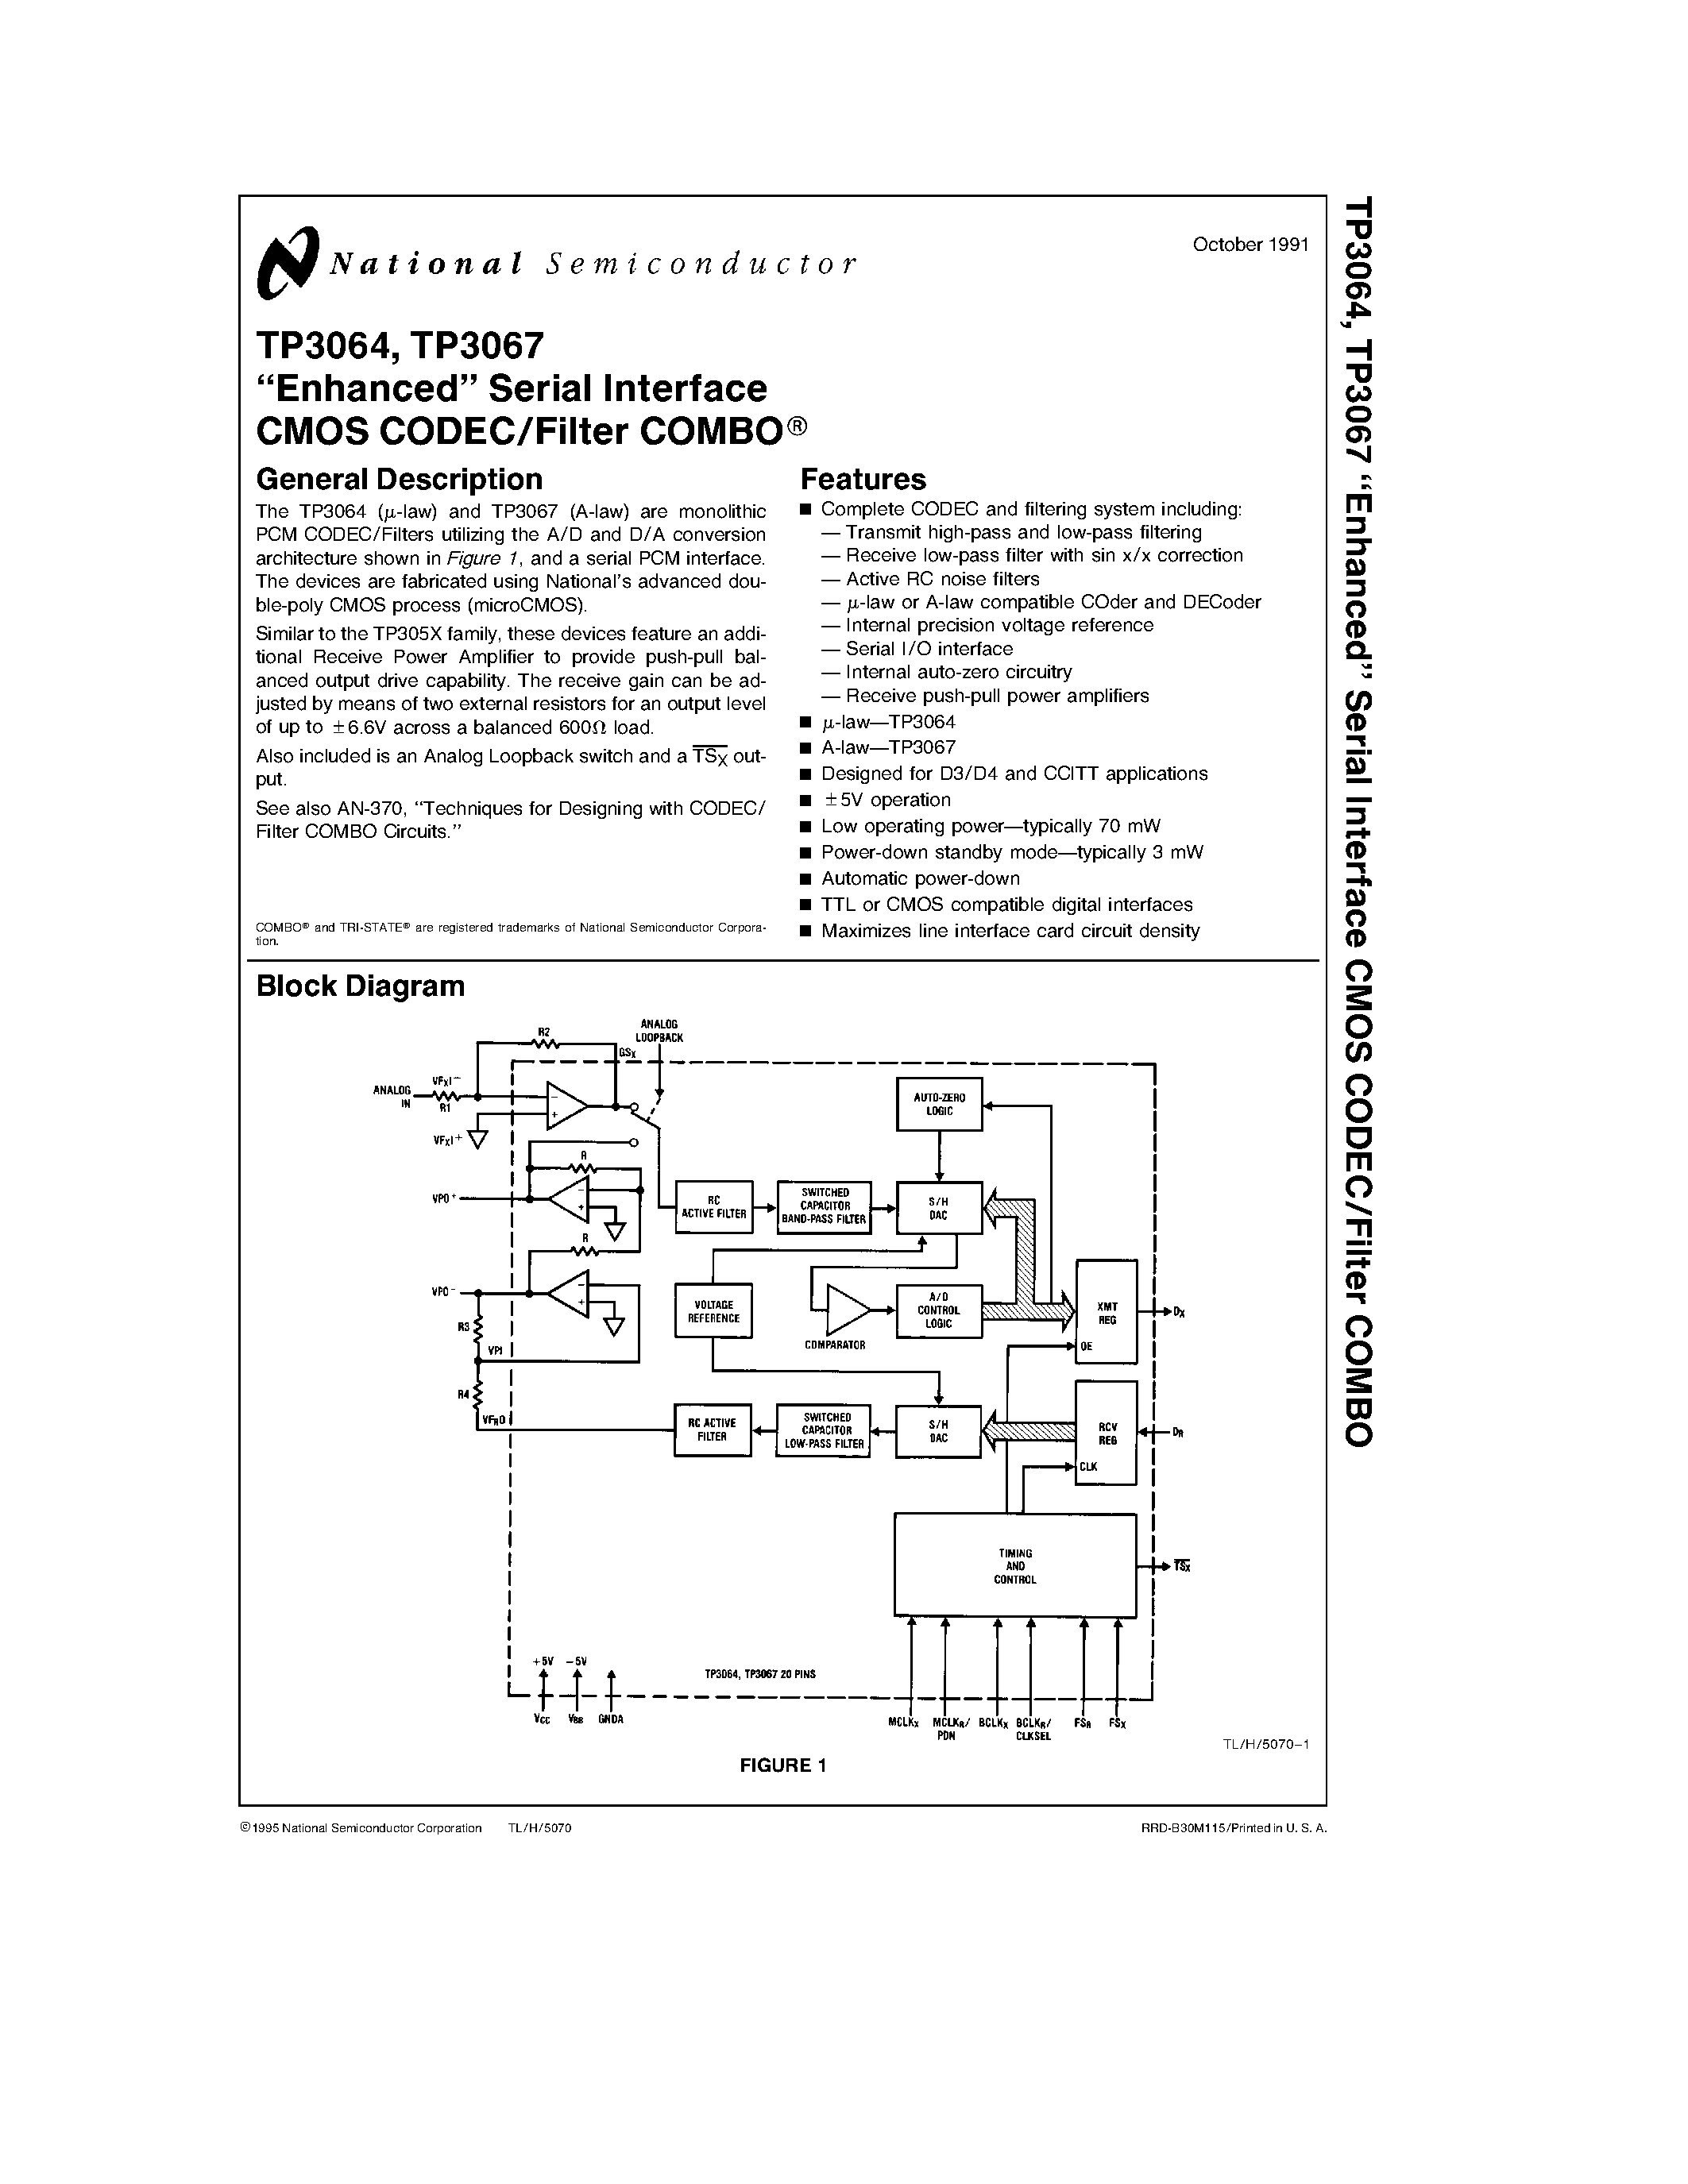 Даташит TP3067N - Enhanced Serial Interface CMOS CODEC/Filter COMBO страница 1